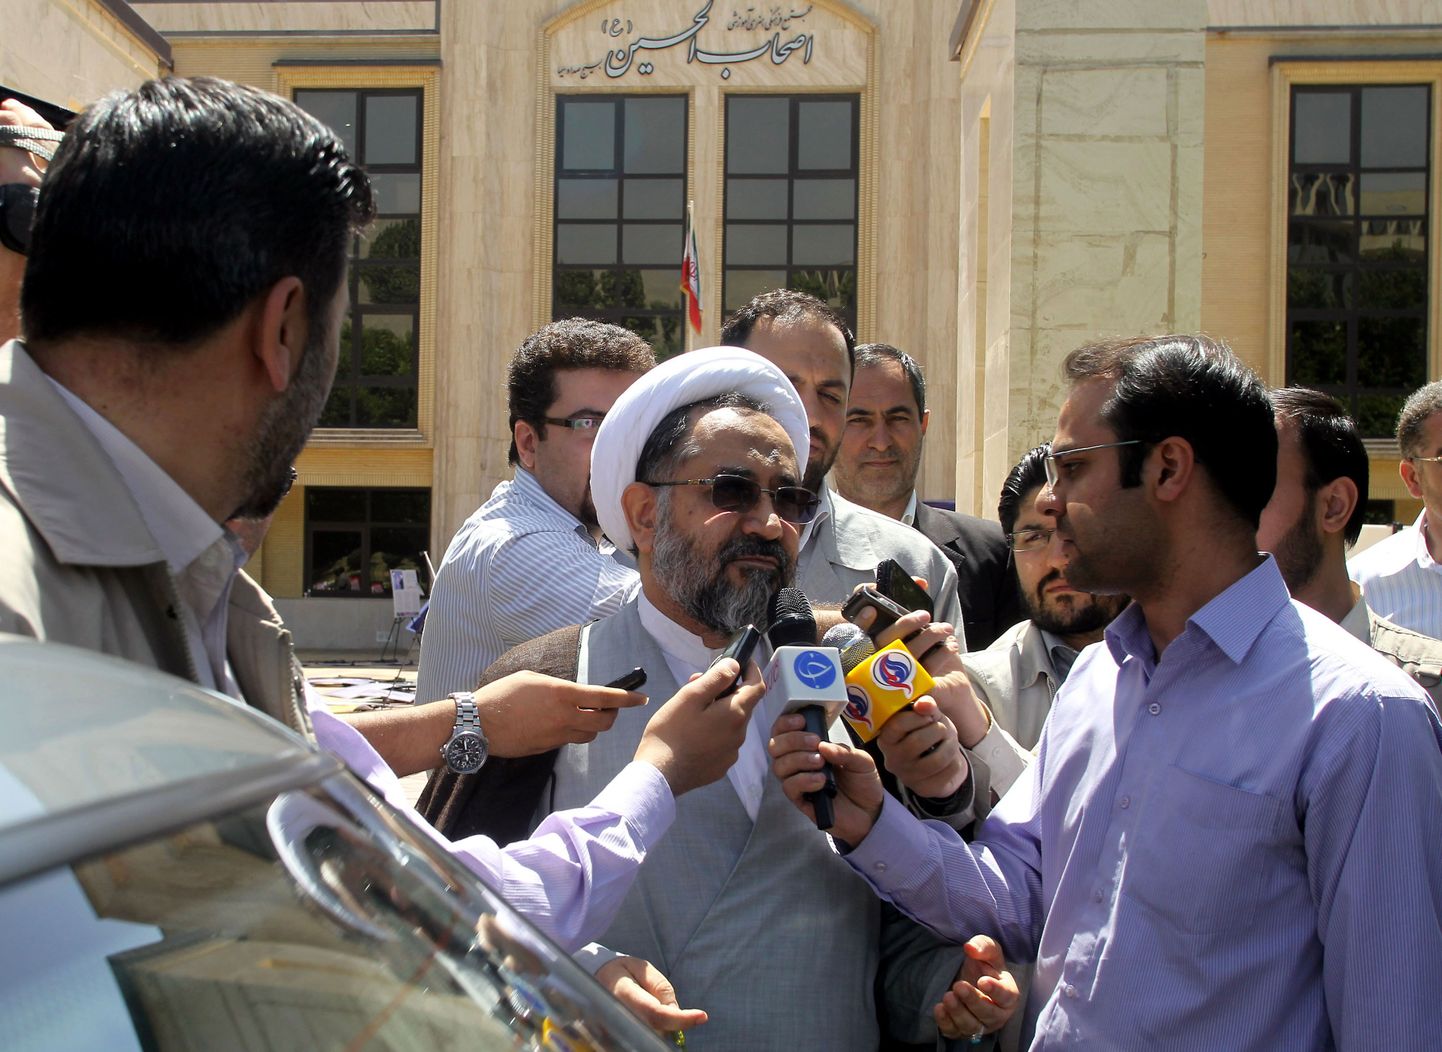 Иранский министр разведки Хейдар Мослехи среди журналистов